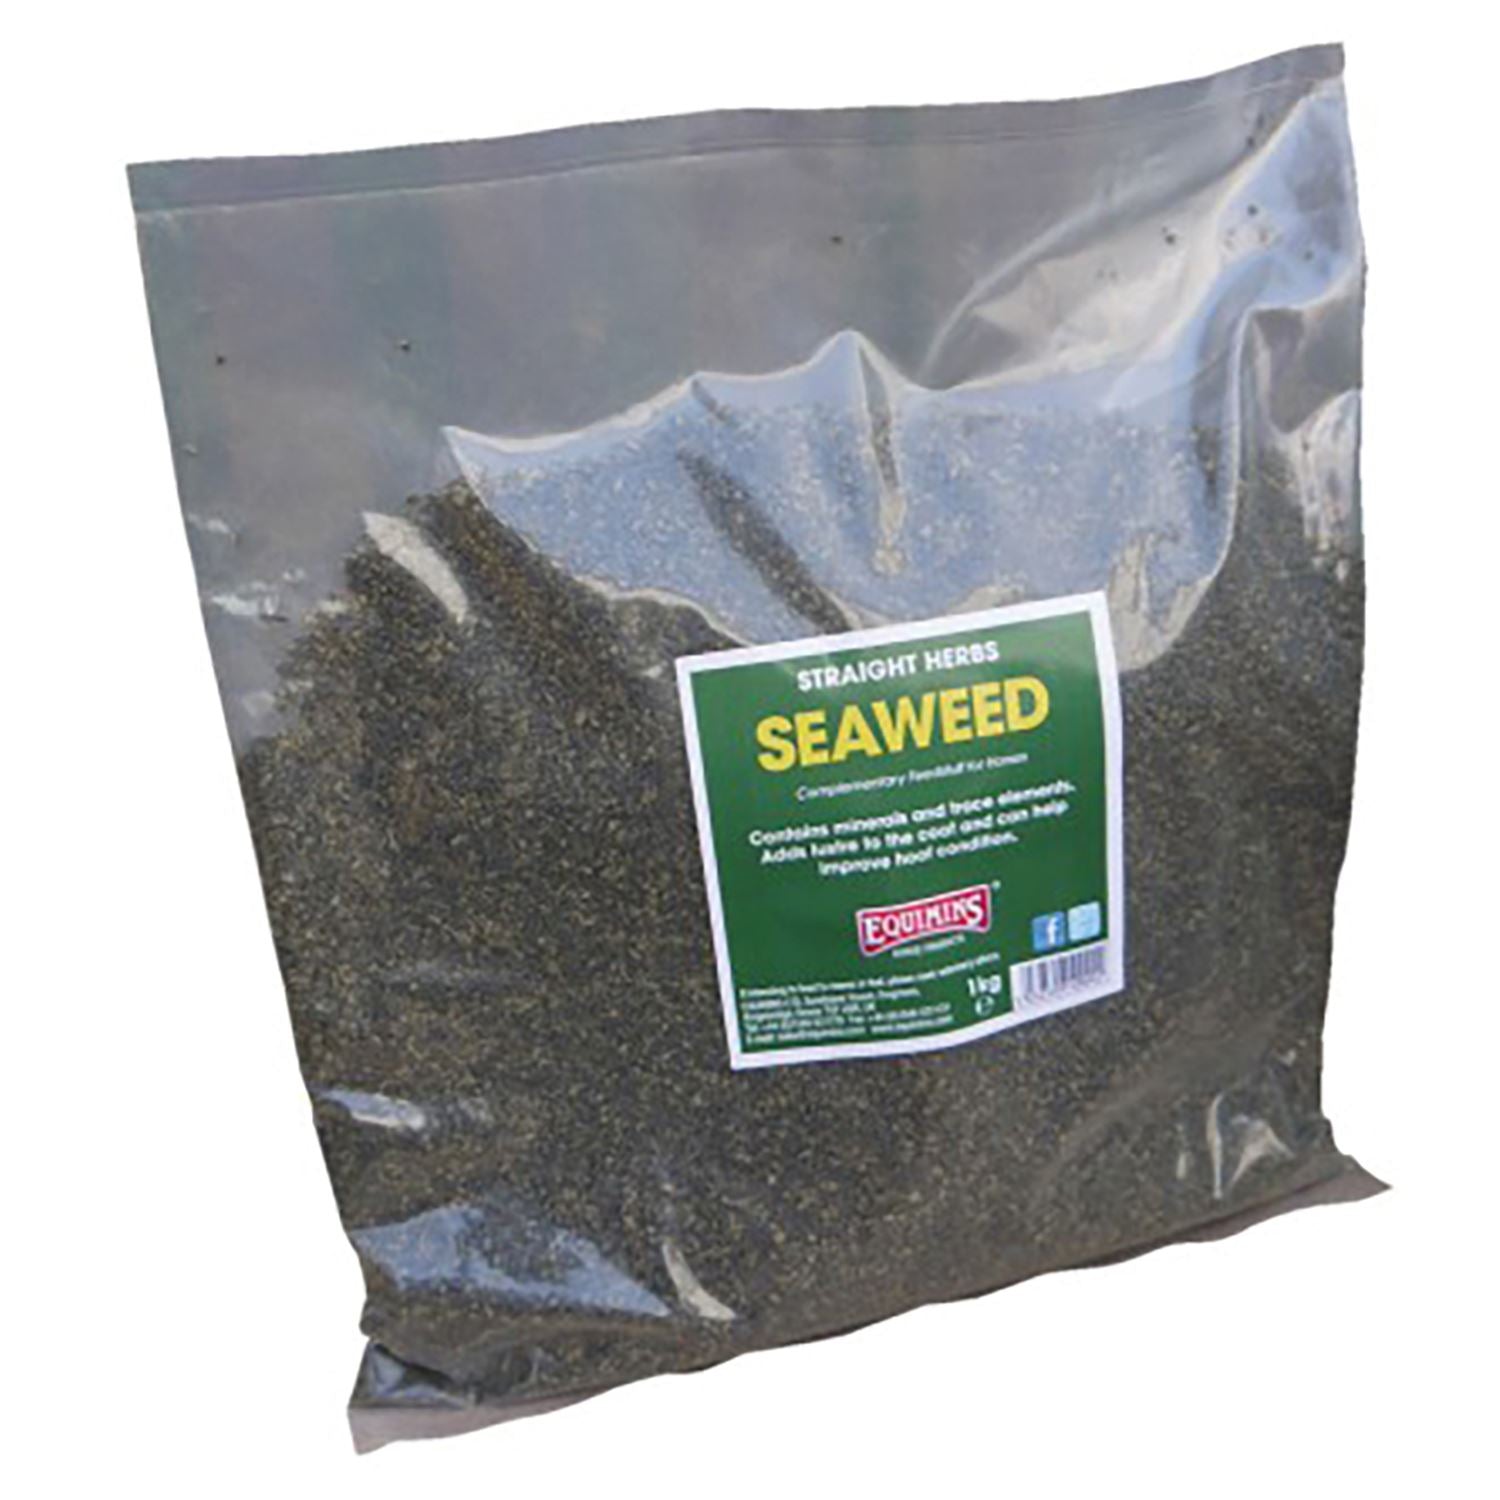 Equimins Straight Herbs Seaweed - Just Horse Riders